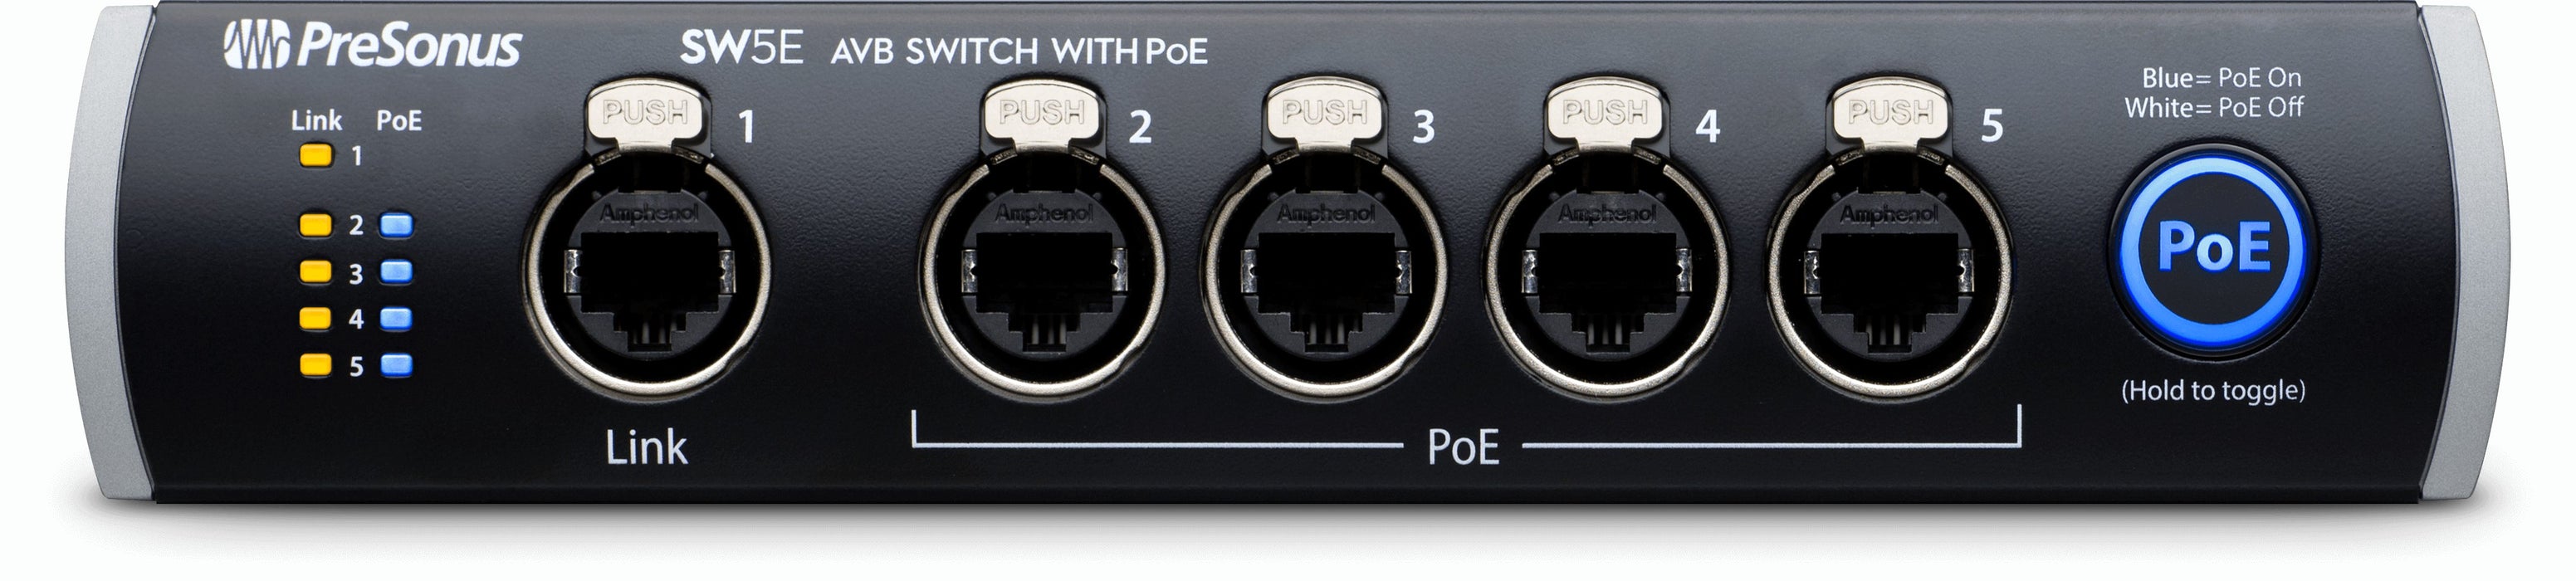 PreSonus SW5E AVB Switch W/ PoE